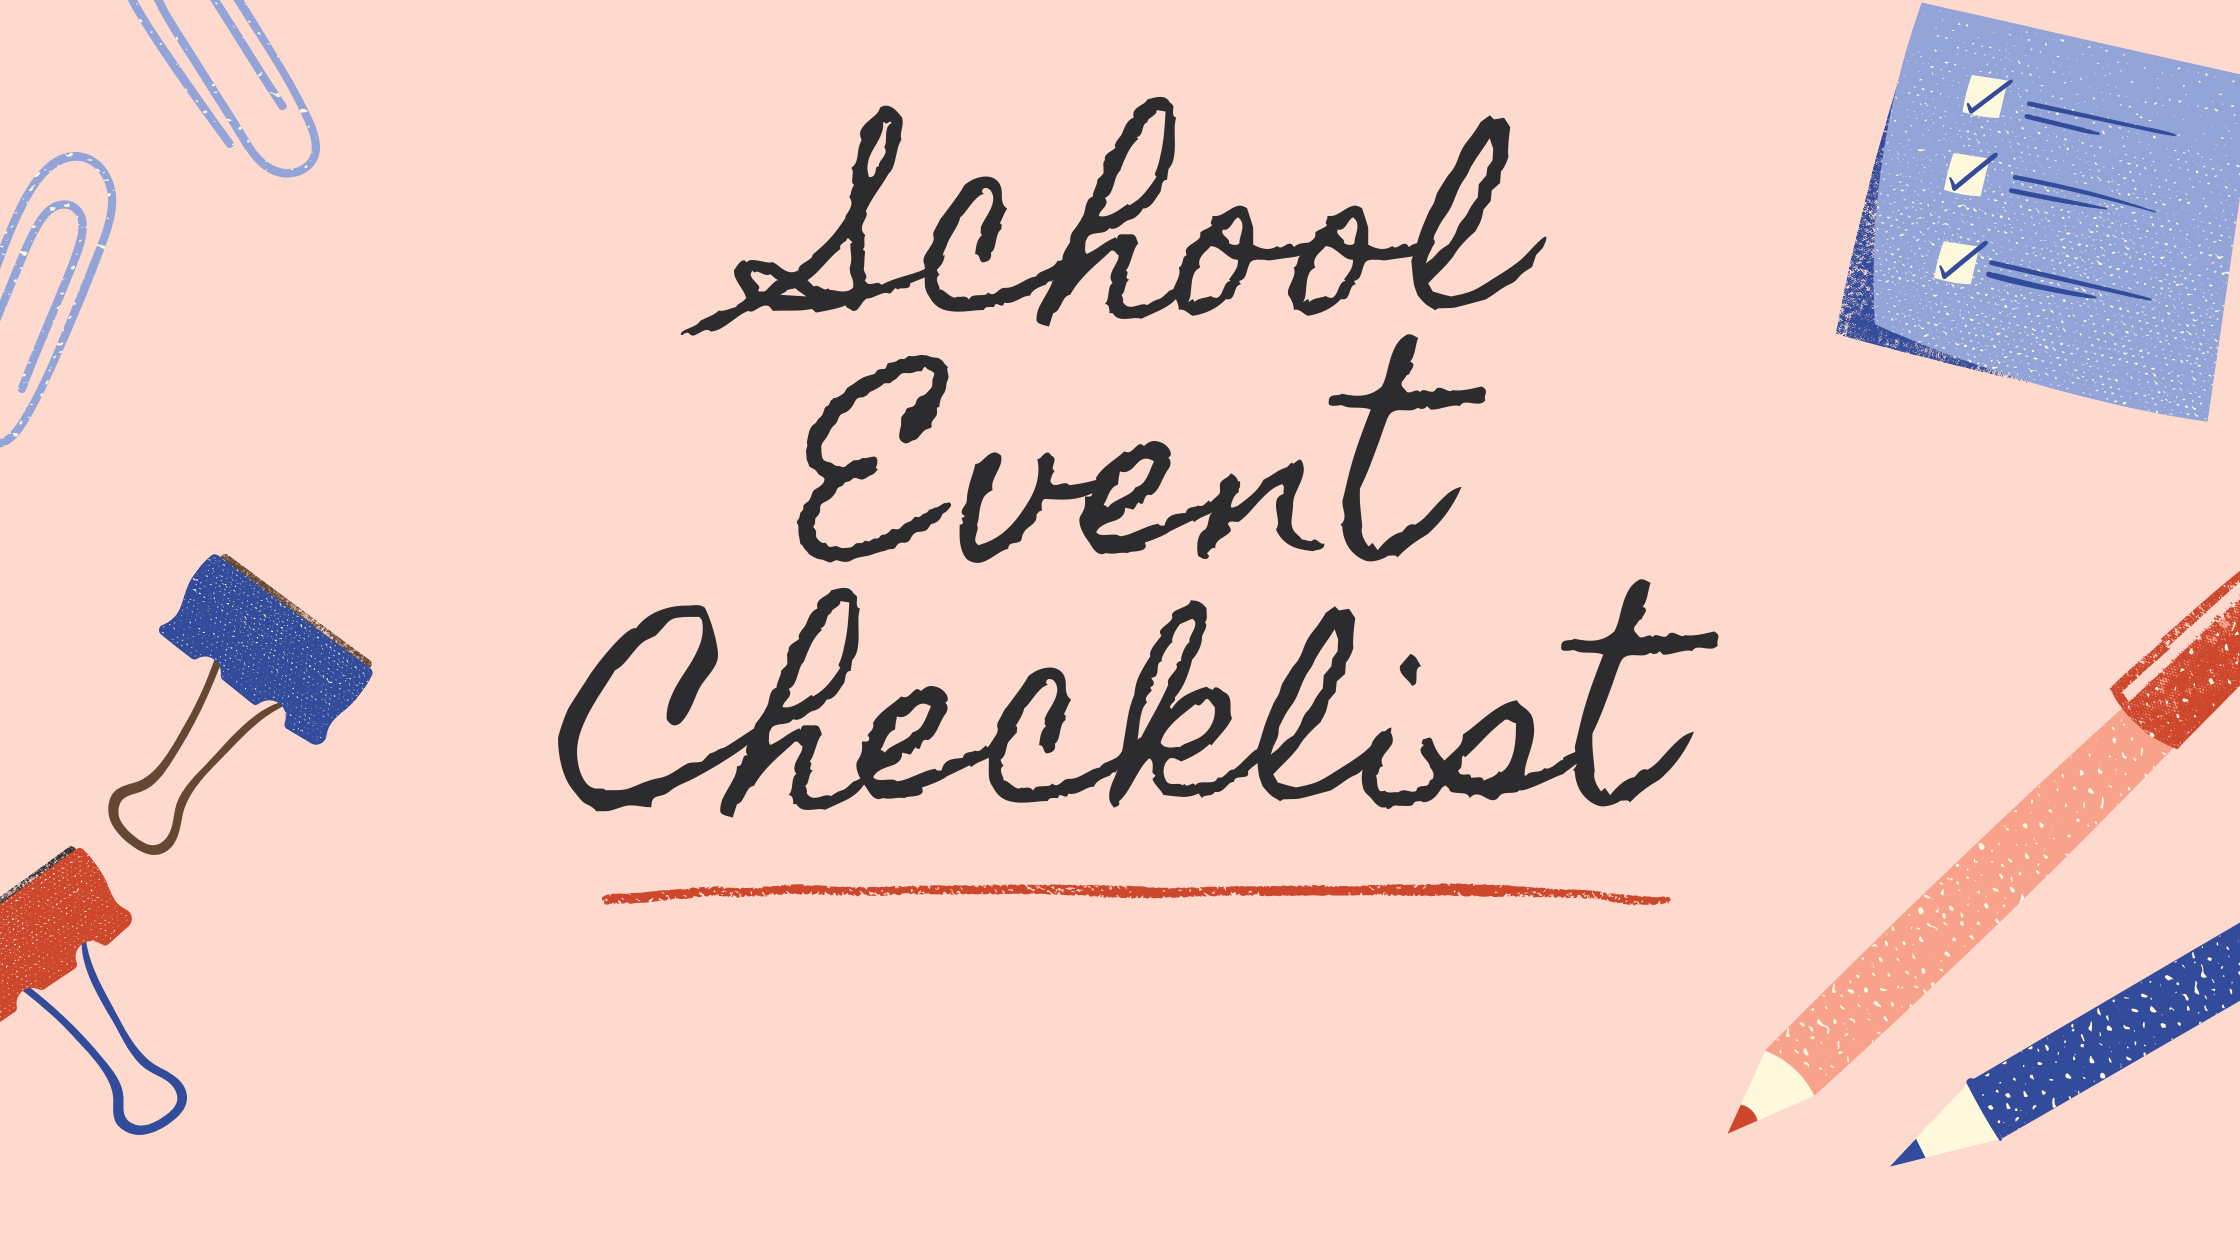 School Event Planning Checklist Image